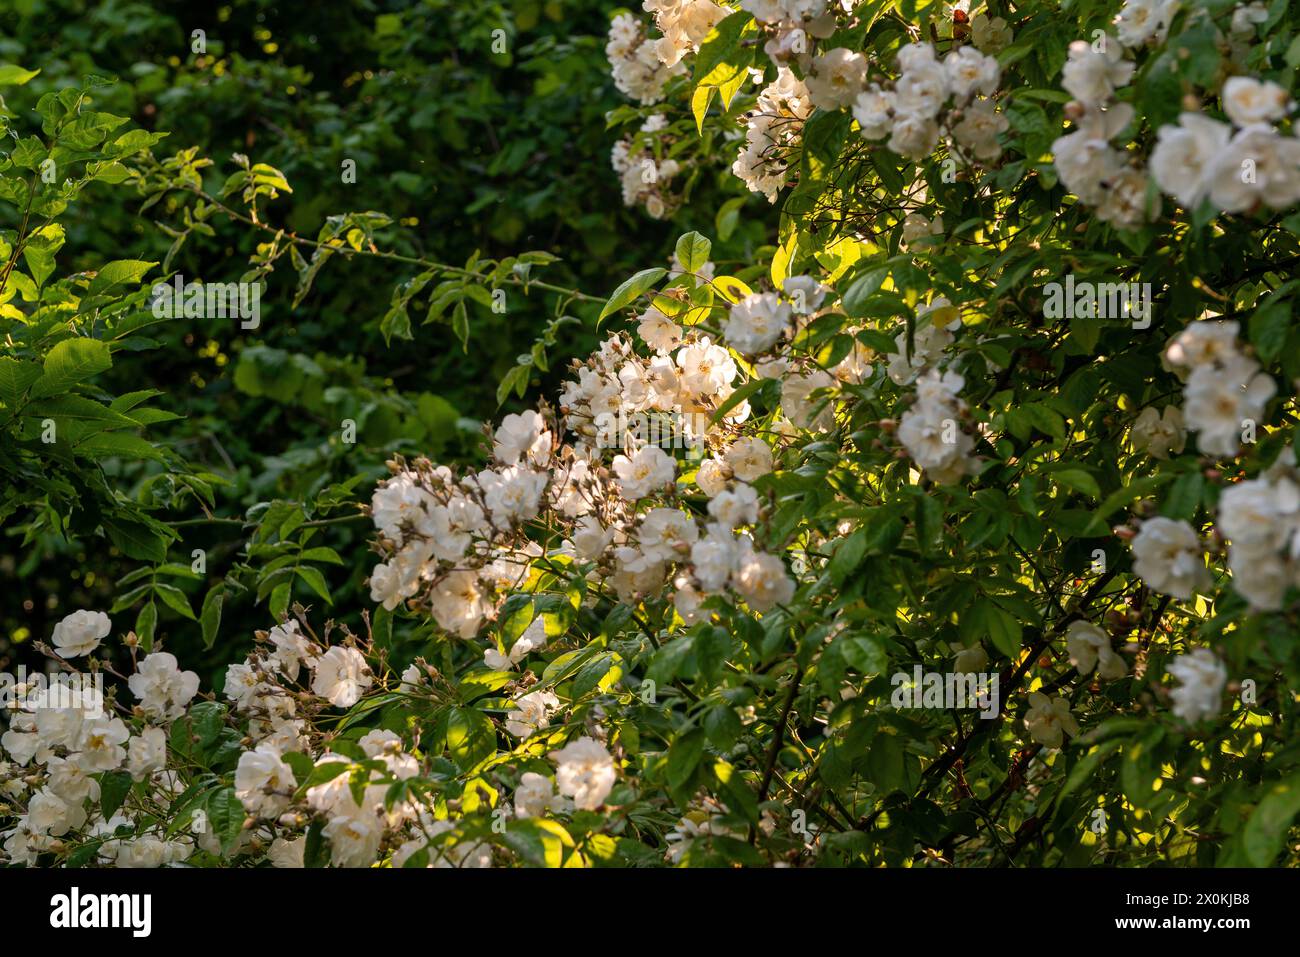 Garden, flowers, cottage garden, rose bush Stock Photo